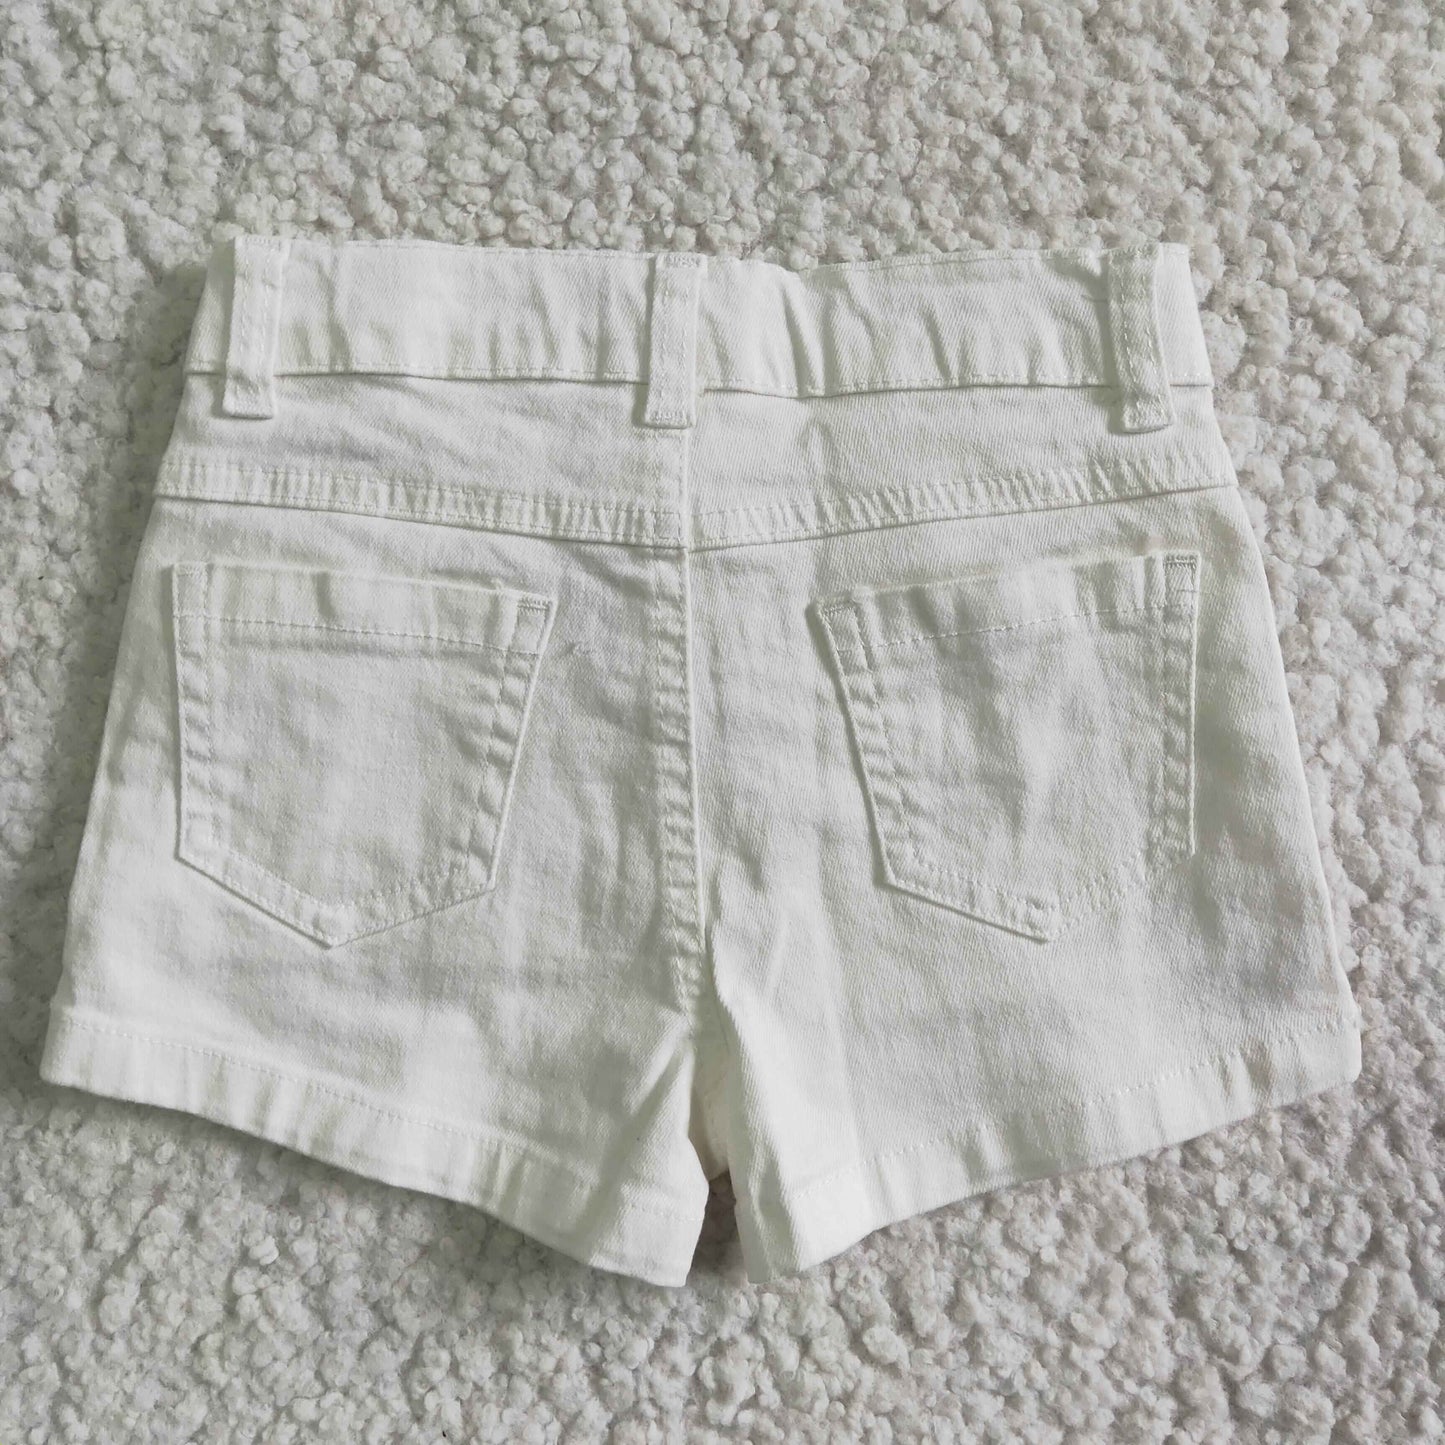 White elastic waistband jeans baby girls denim shorts